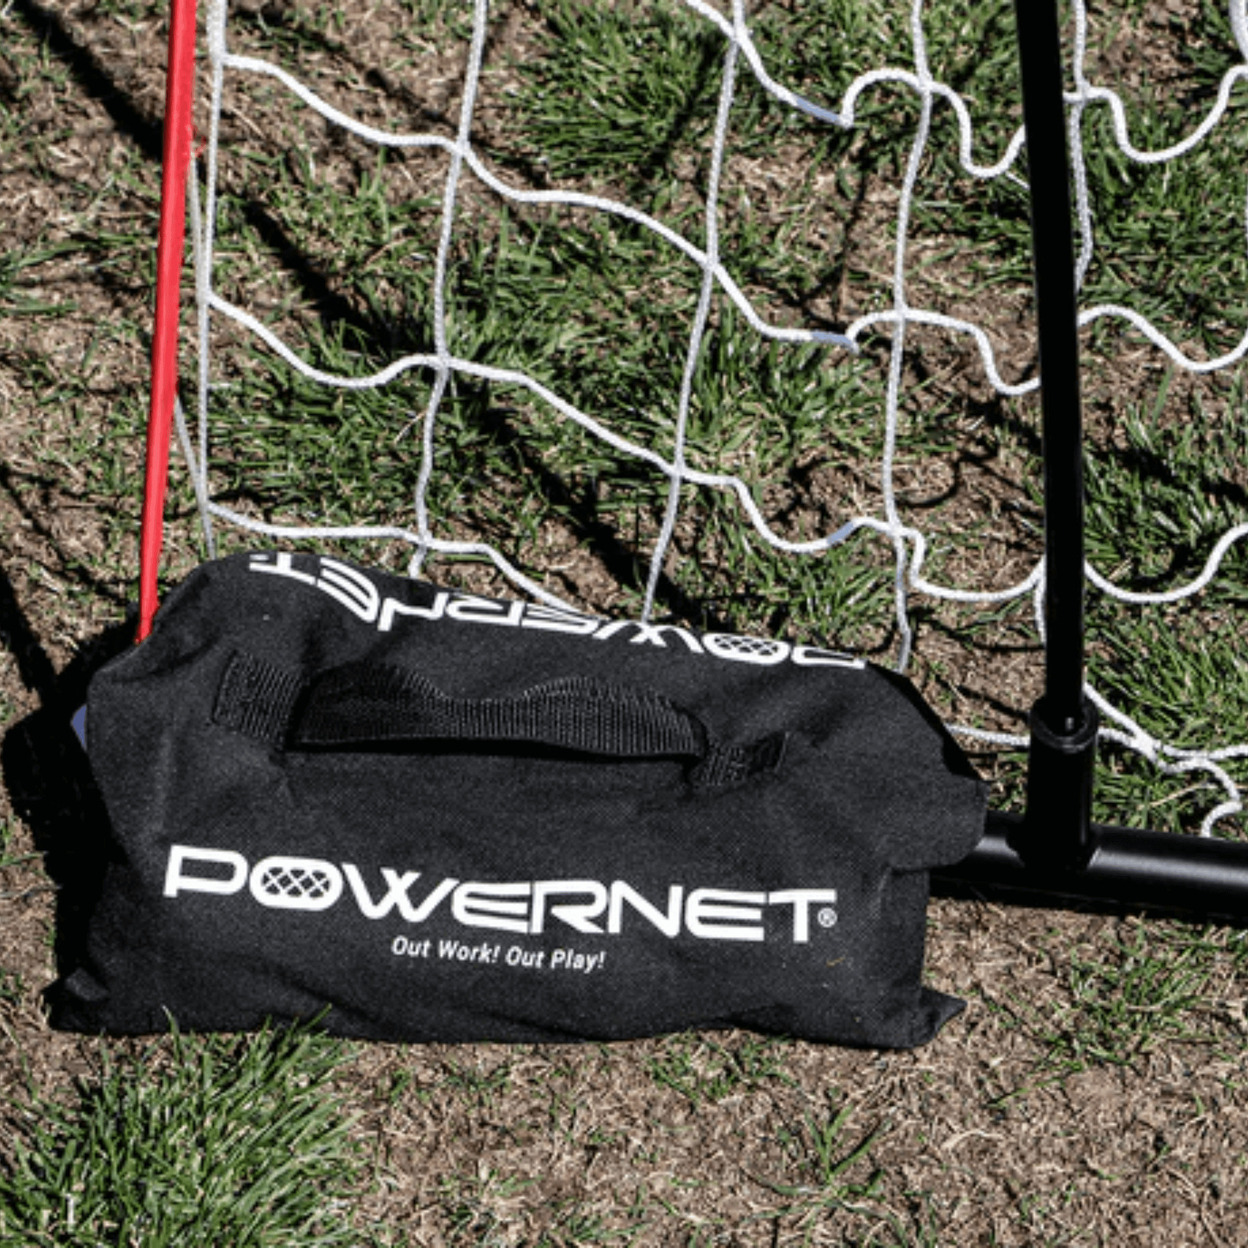 PowerNet 12x6 Ultra Light Weight Soccer Goal With Sandbags ()